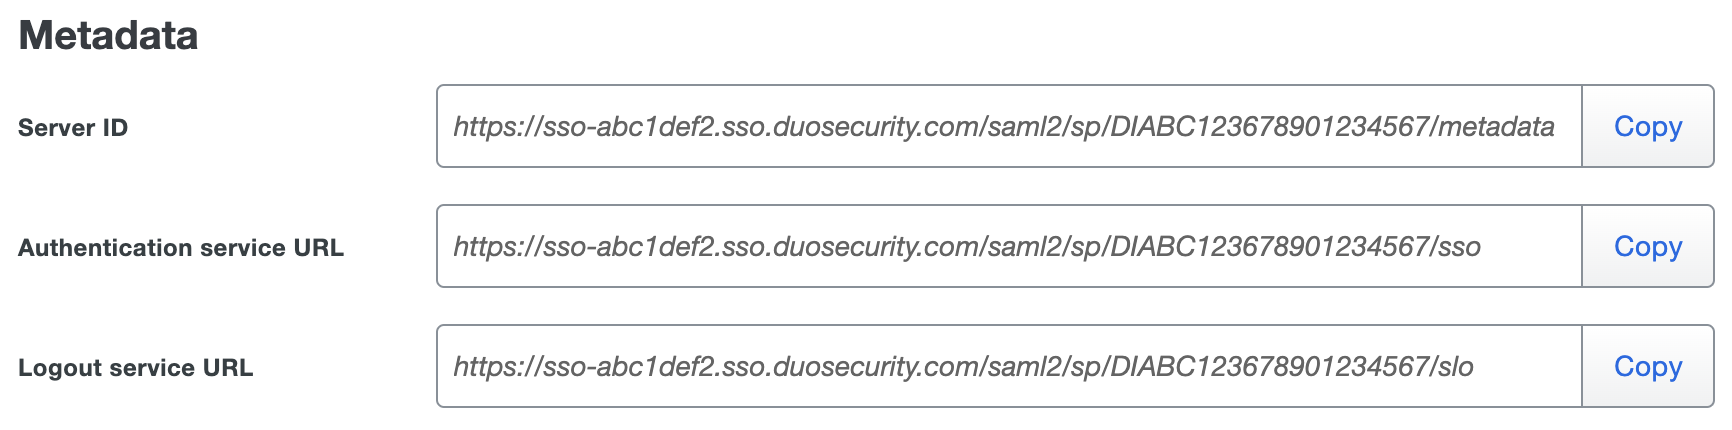 Duo SonicWall SMA 200 Series Metadata URLs